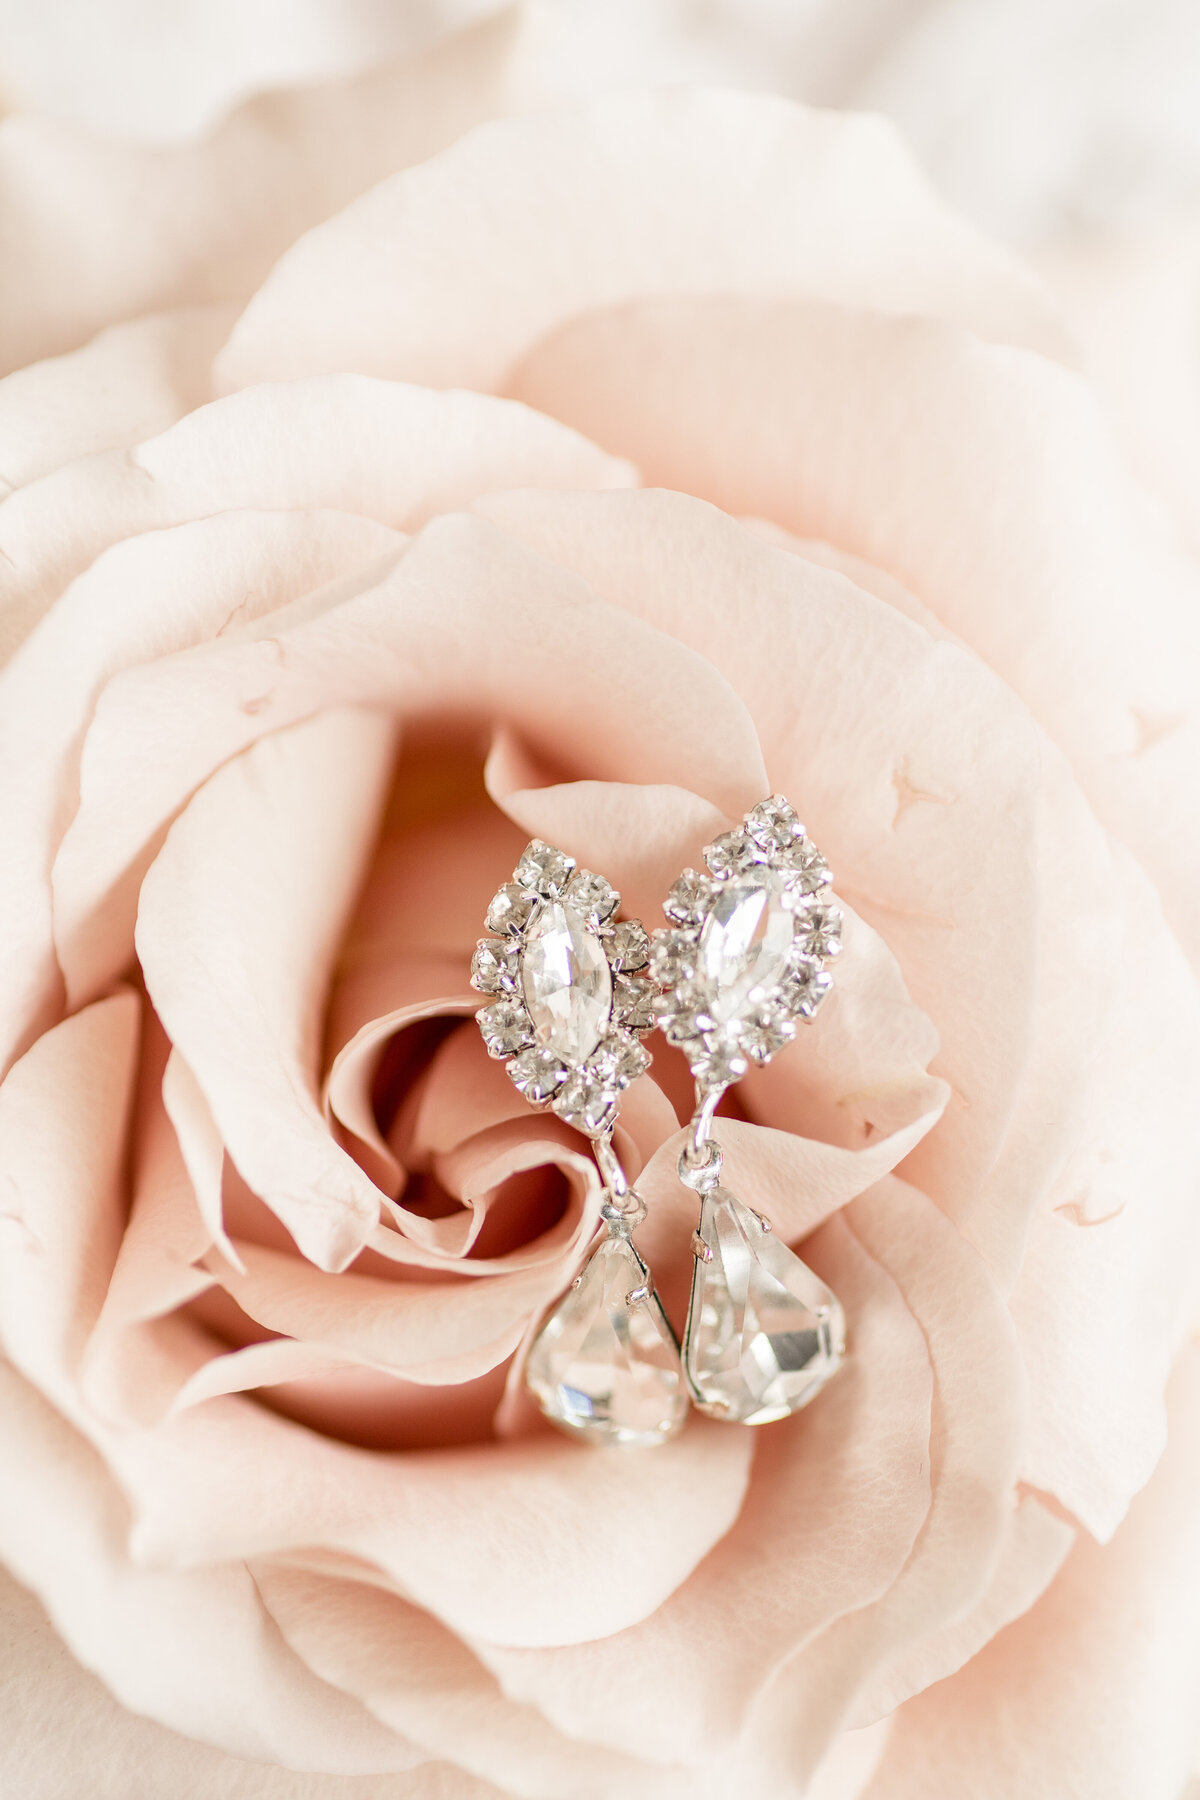 Wedding earrings resting on pink flower